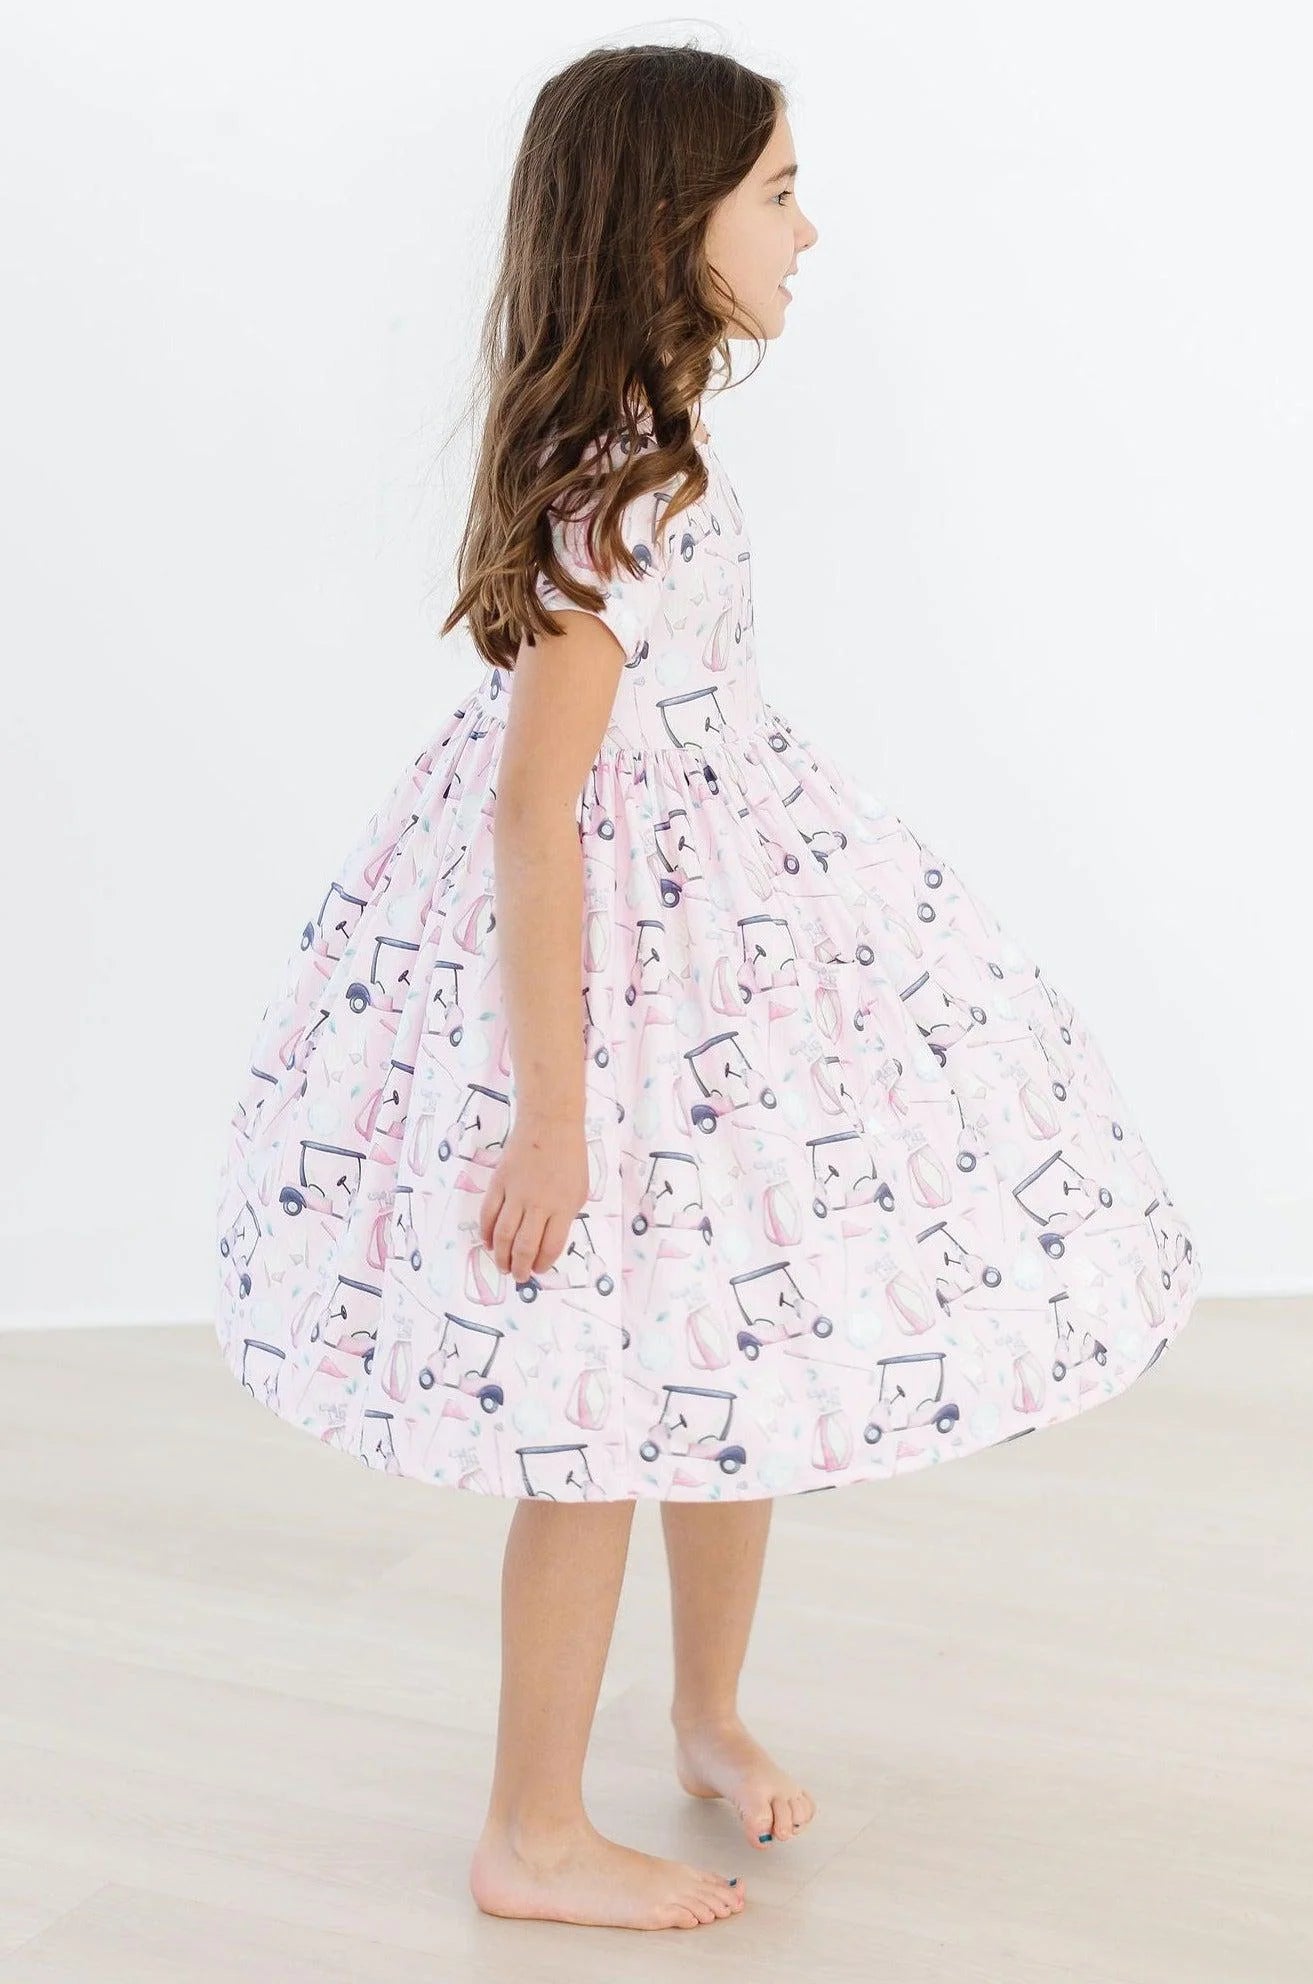 Tee Time Pocket Twirl Dress by Mila & Rose